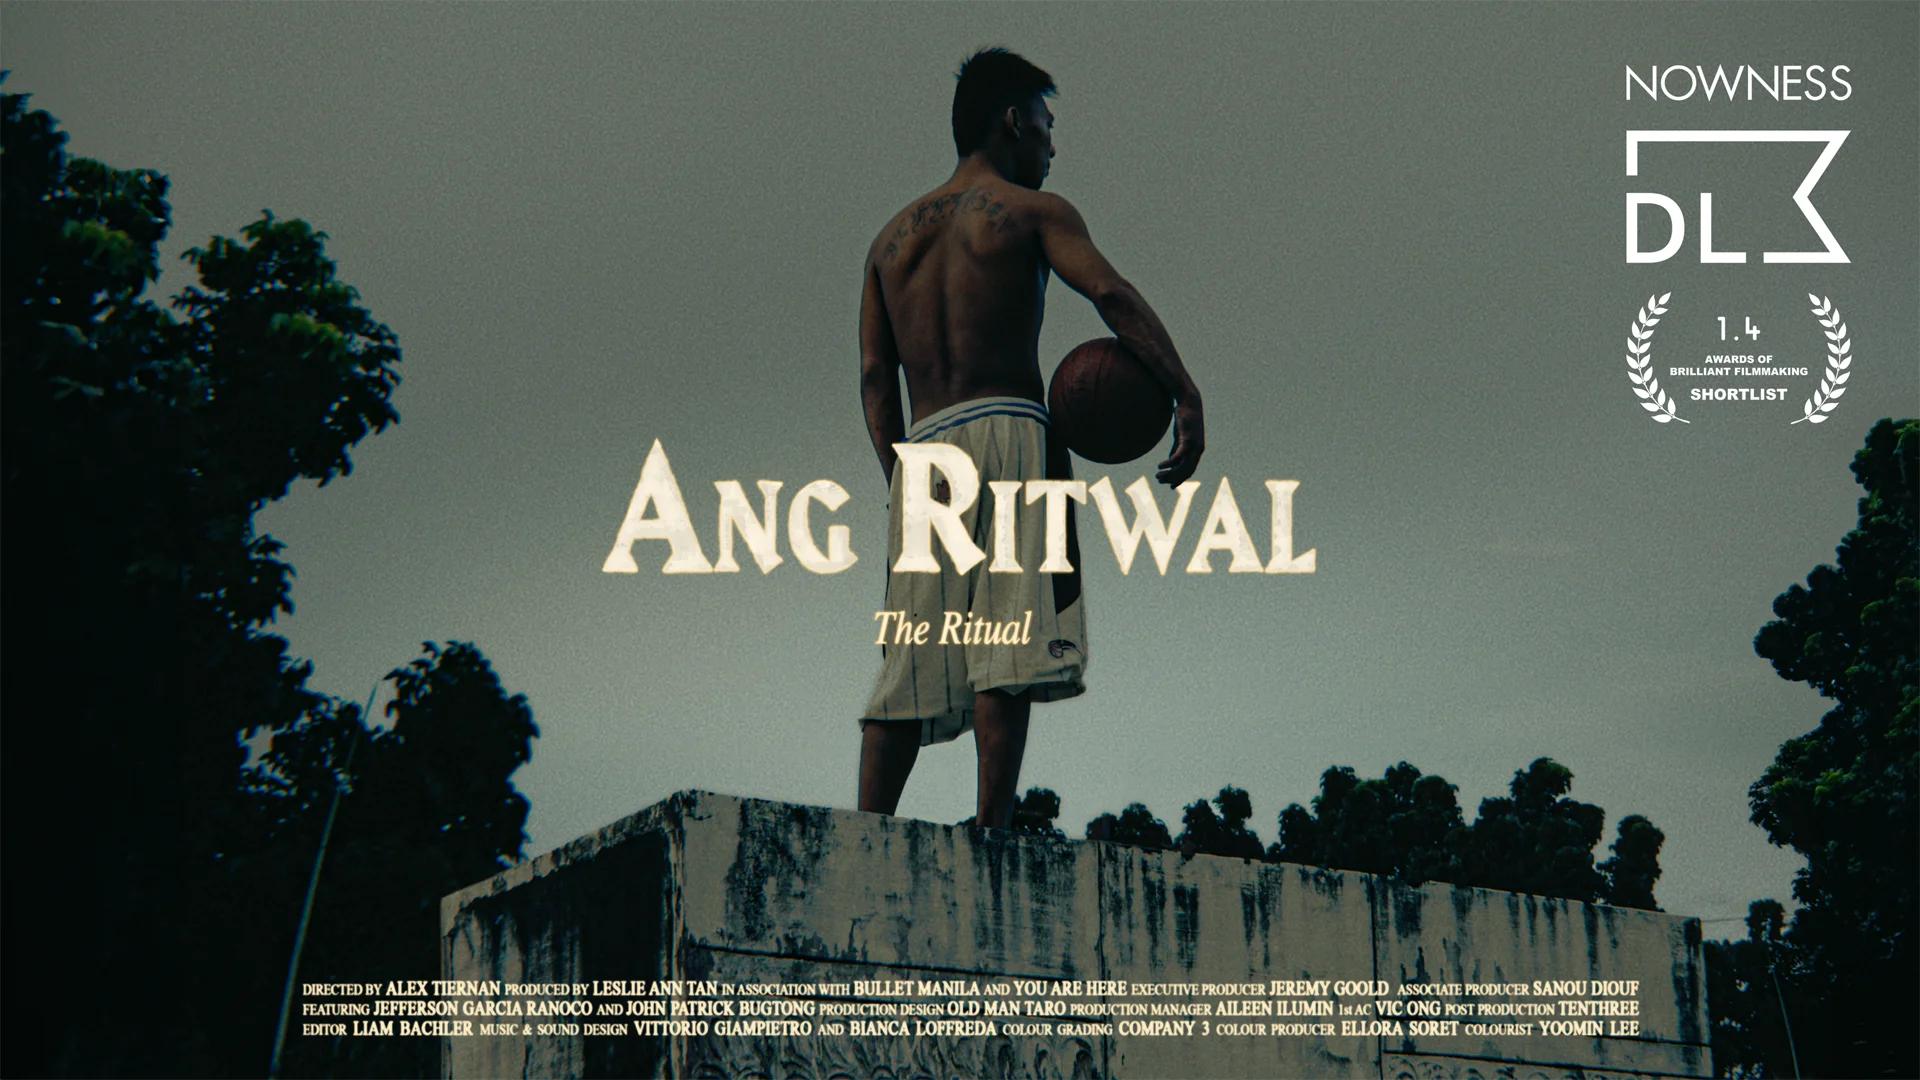 Ang Ritwal (The Ritual) on Vimeo [Video]